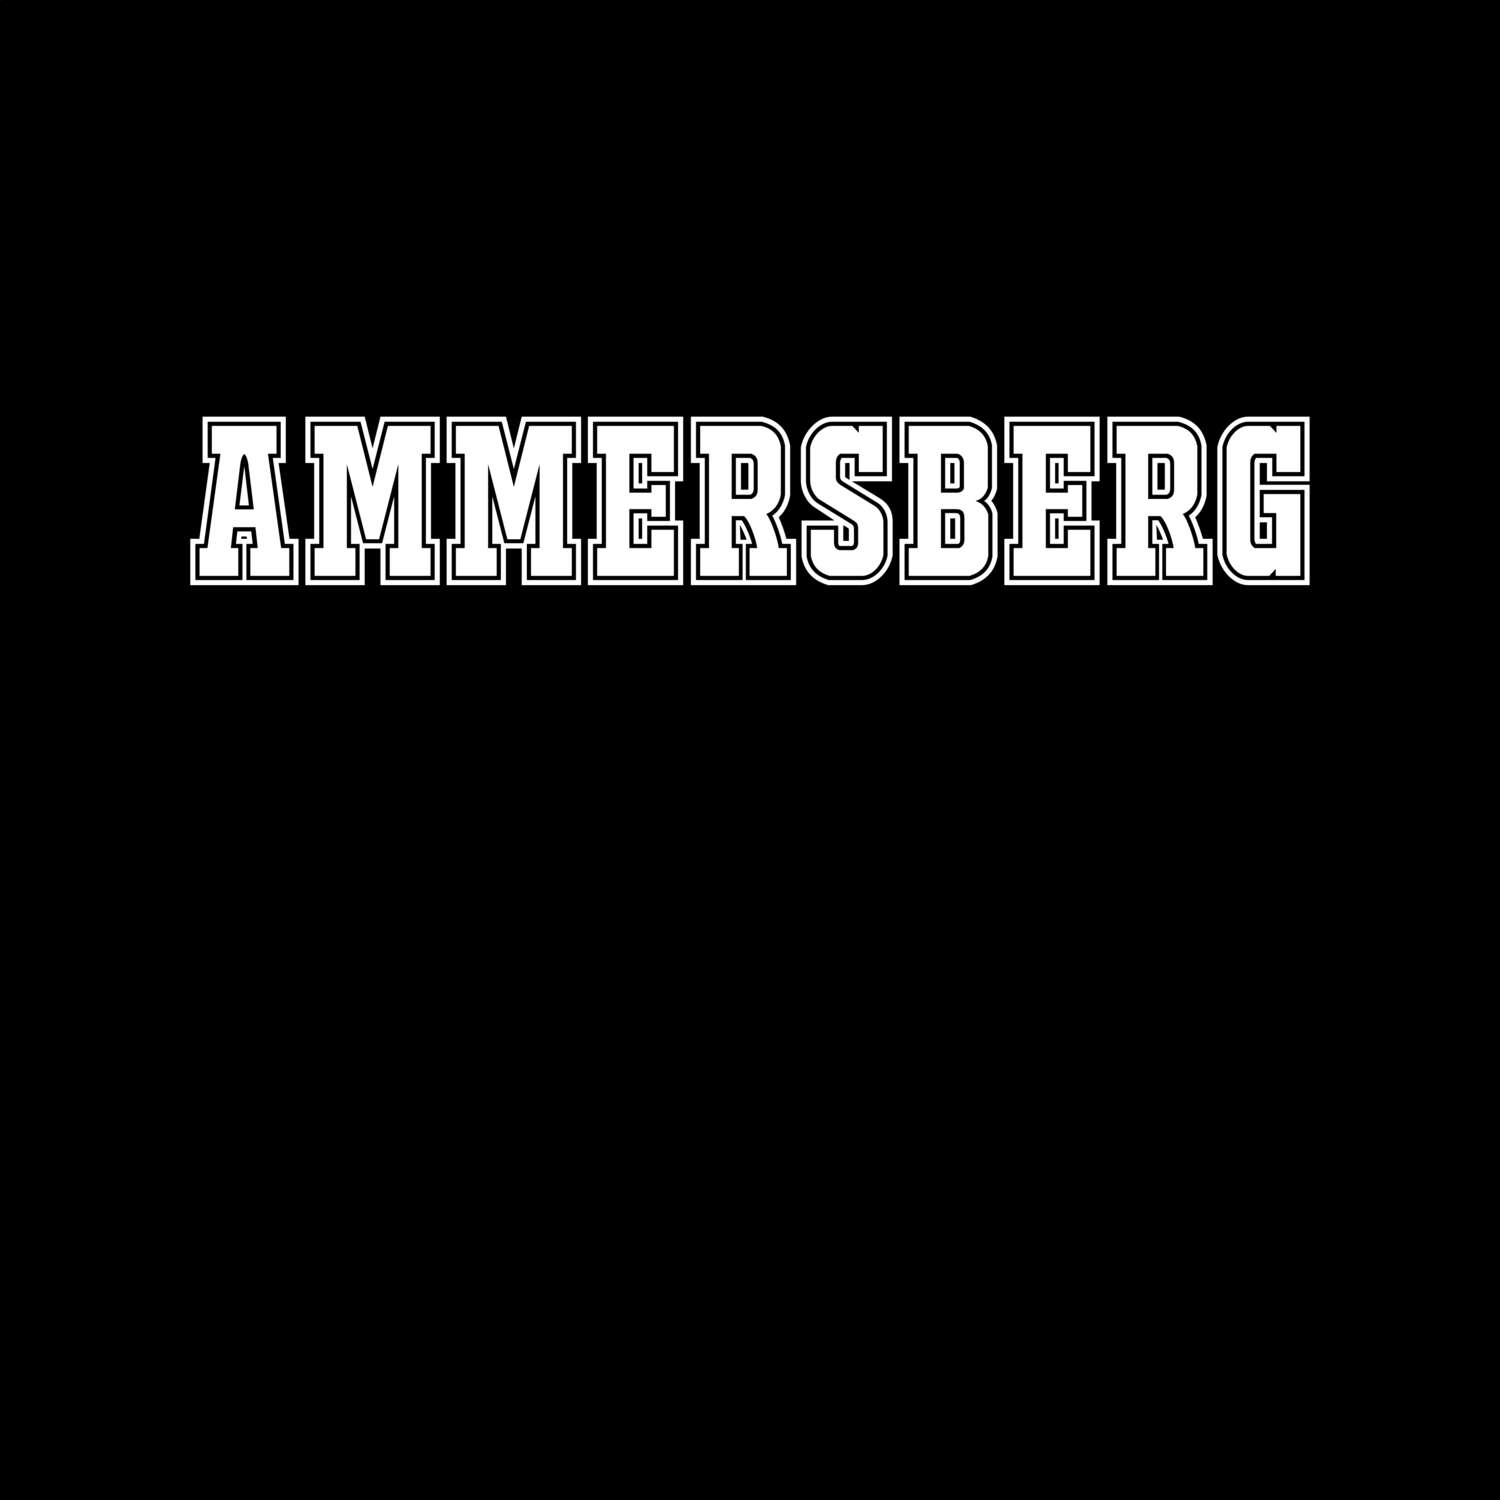 Ammersberg T-Shirt »Classic«